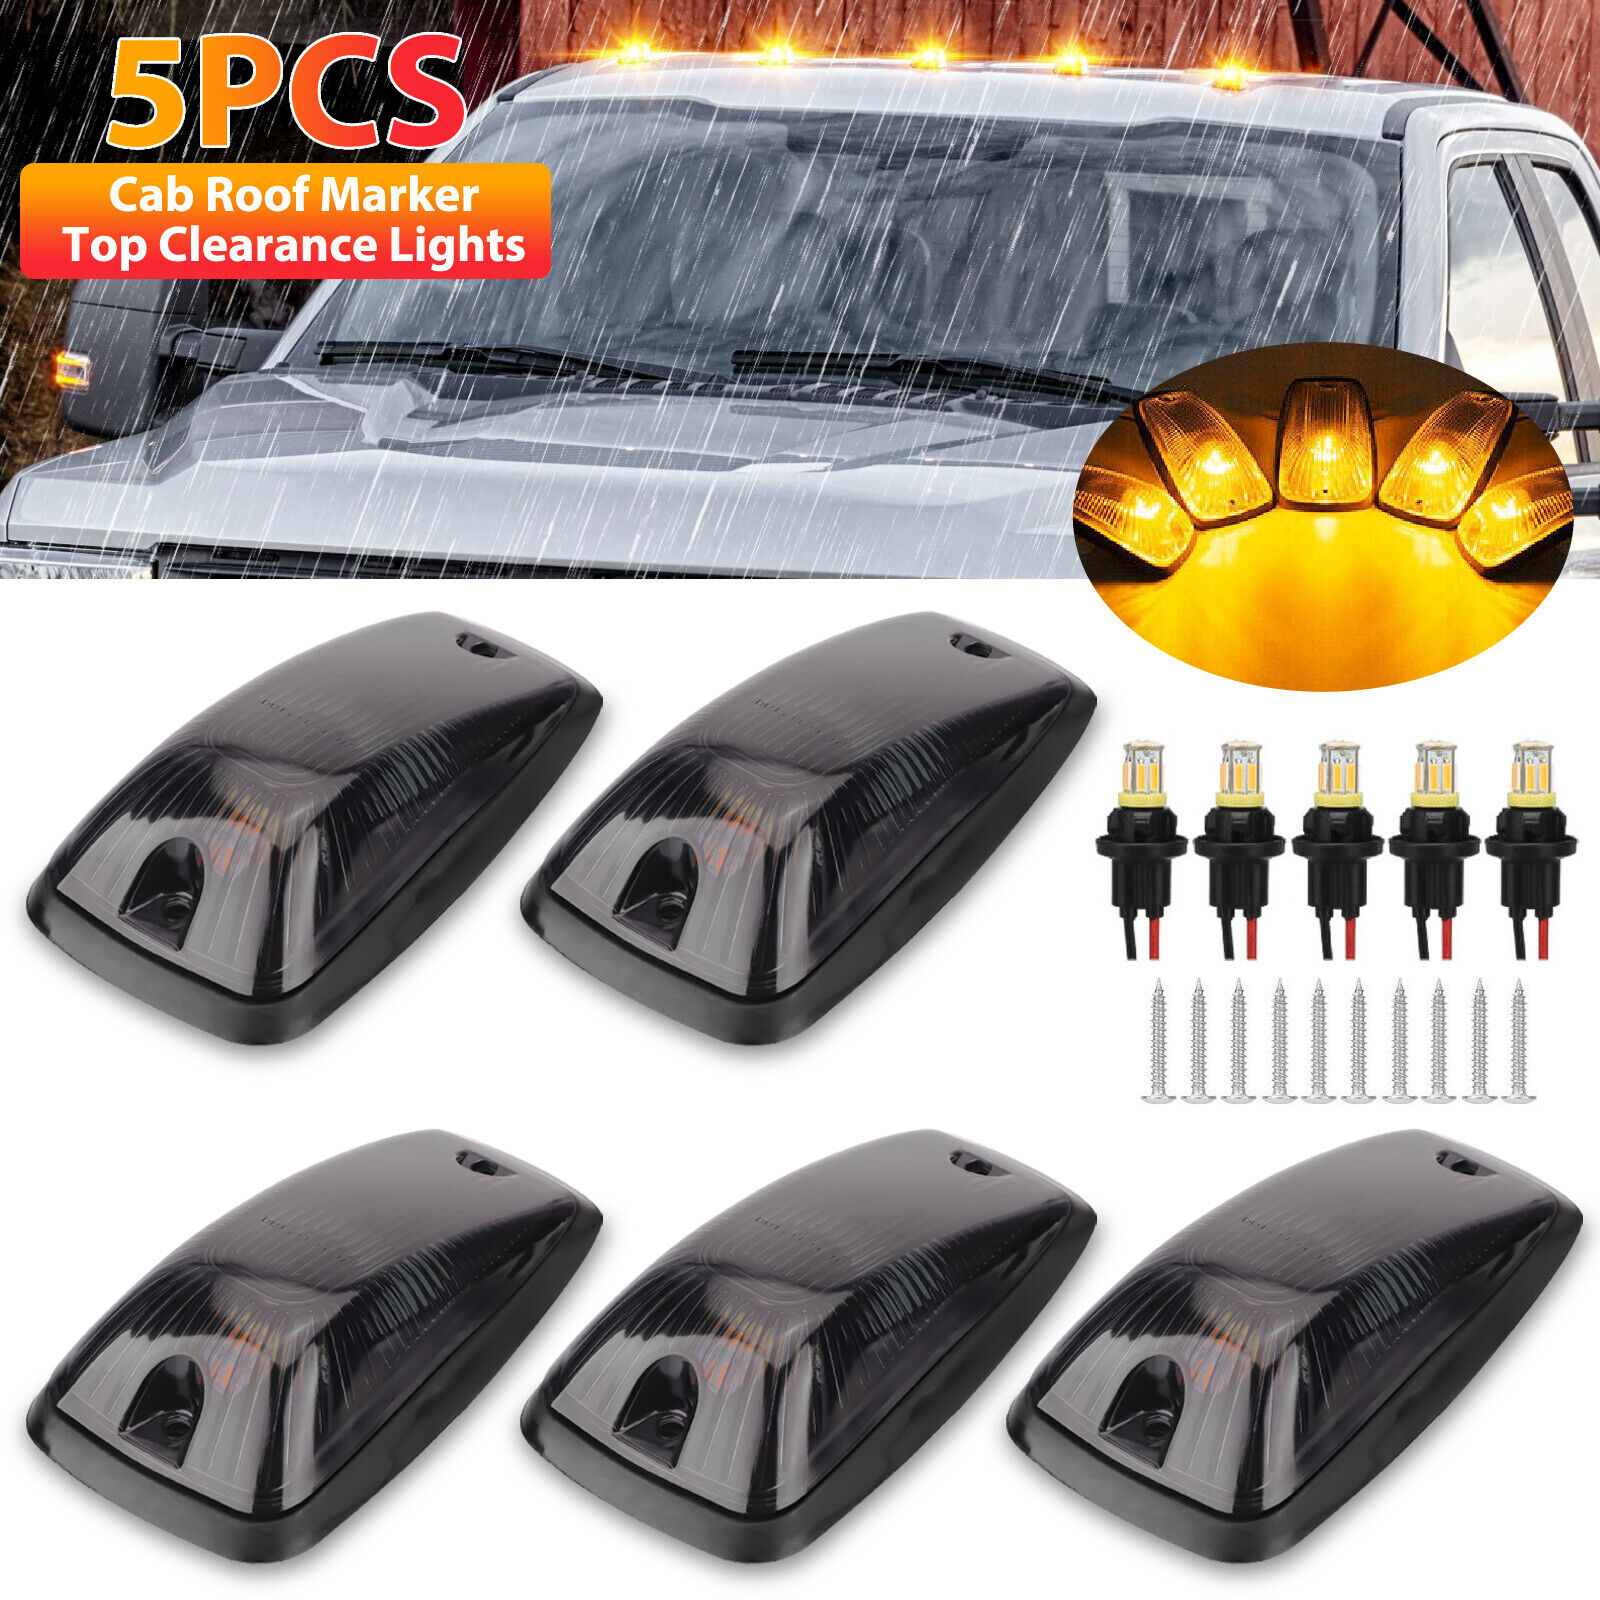 5pcs Smoke LED Cab Roof Light Marker Amber For 1988-2002 Chevy/GMC Pickup Trucks